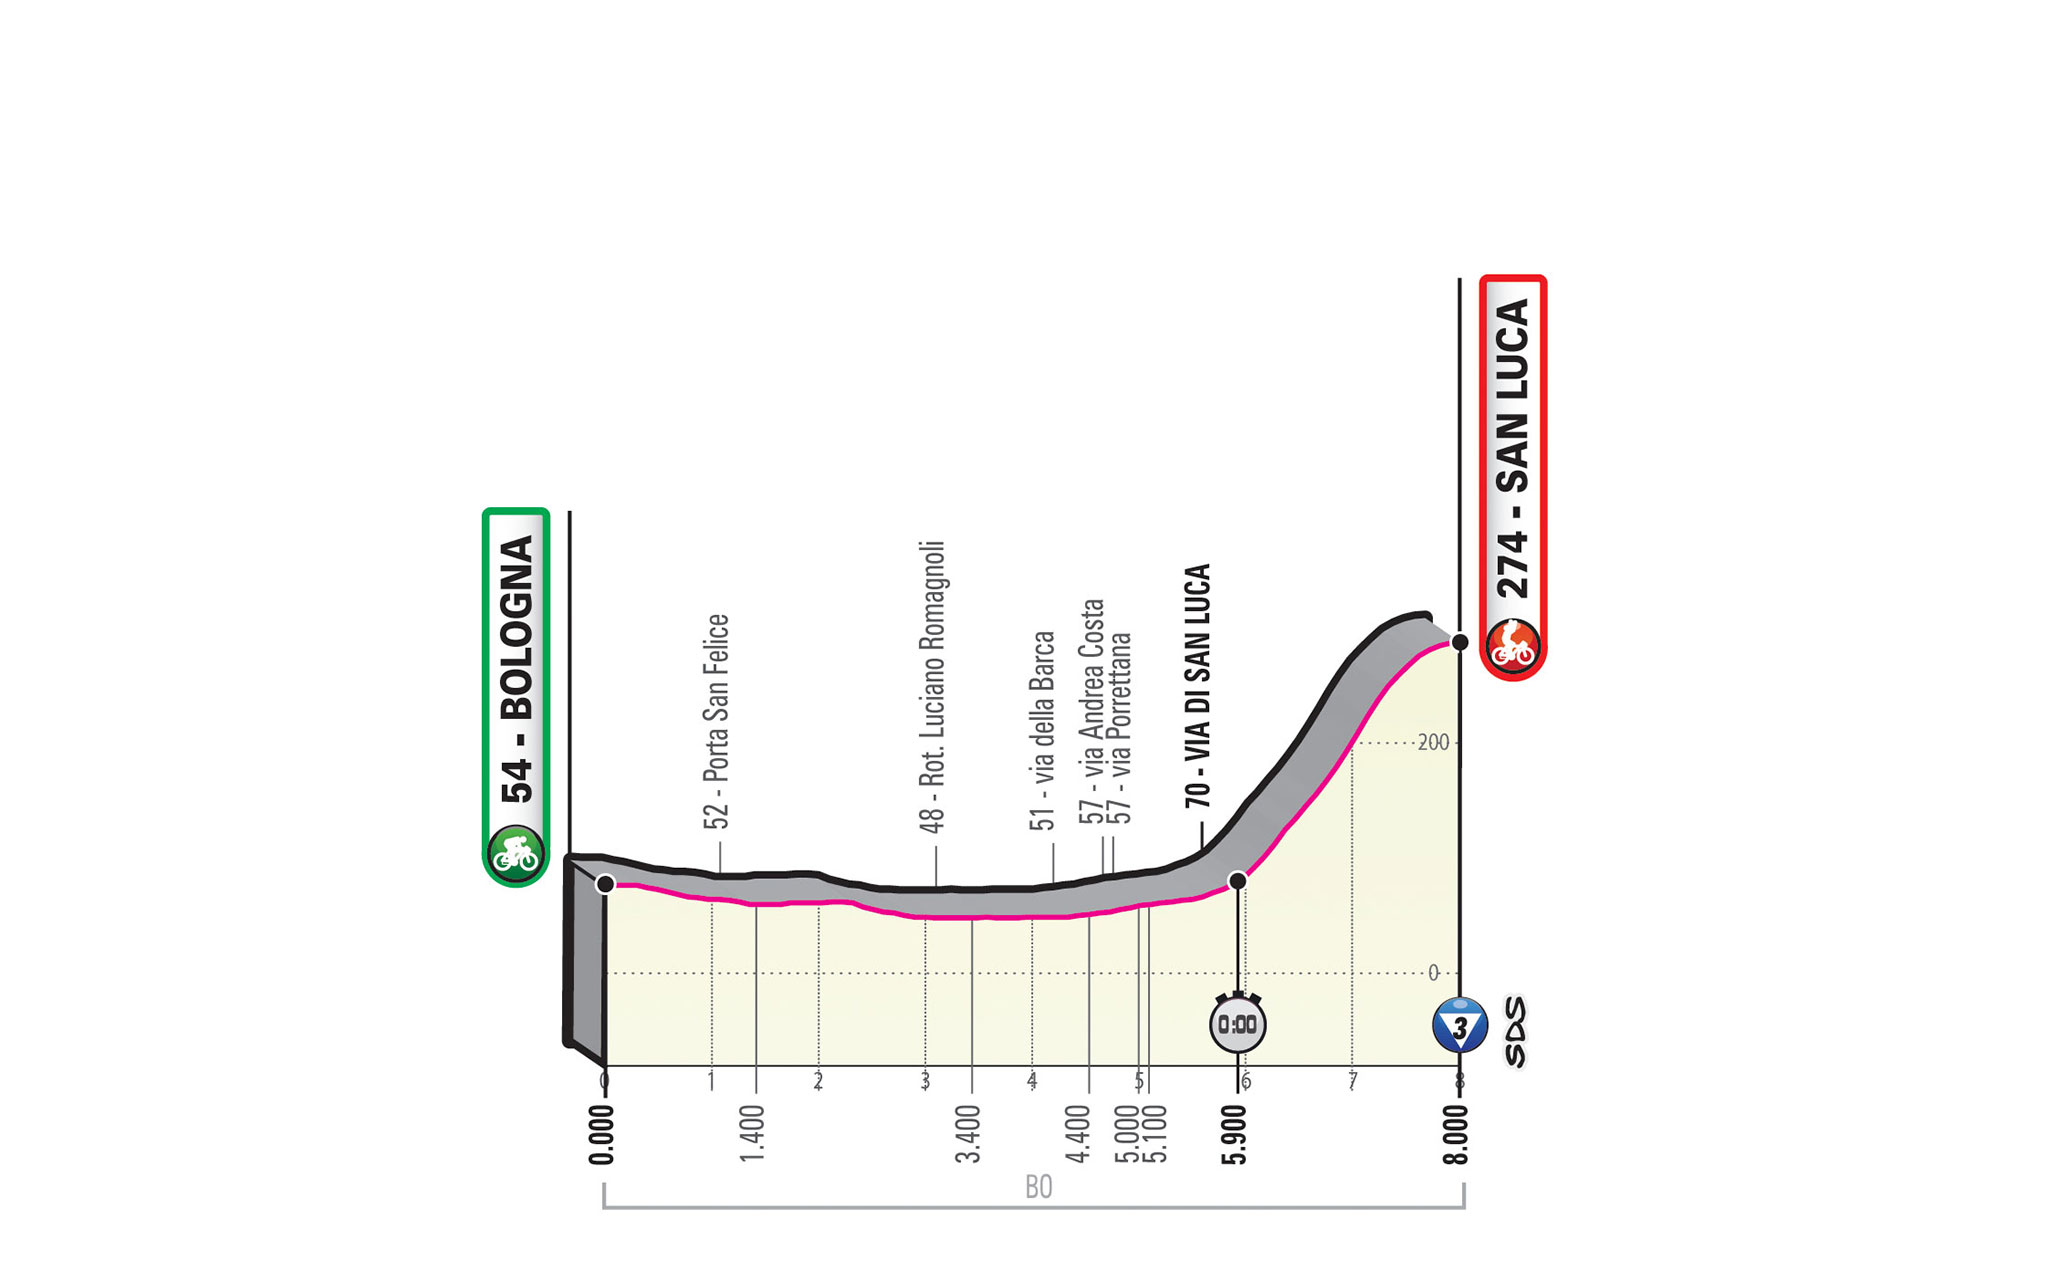 Etapa 1 Giro de Italia 2019